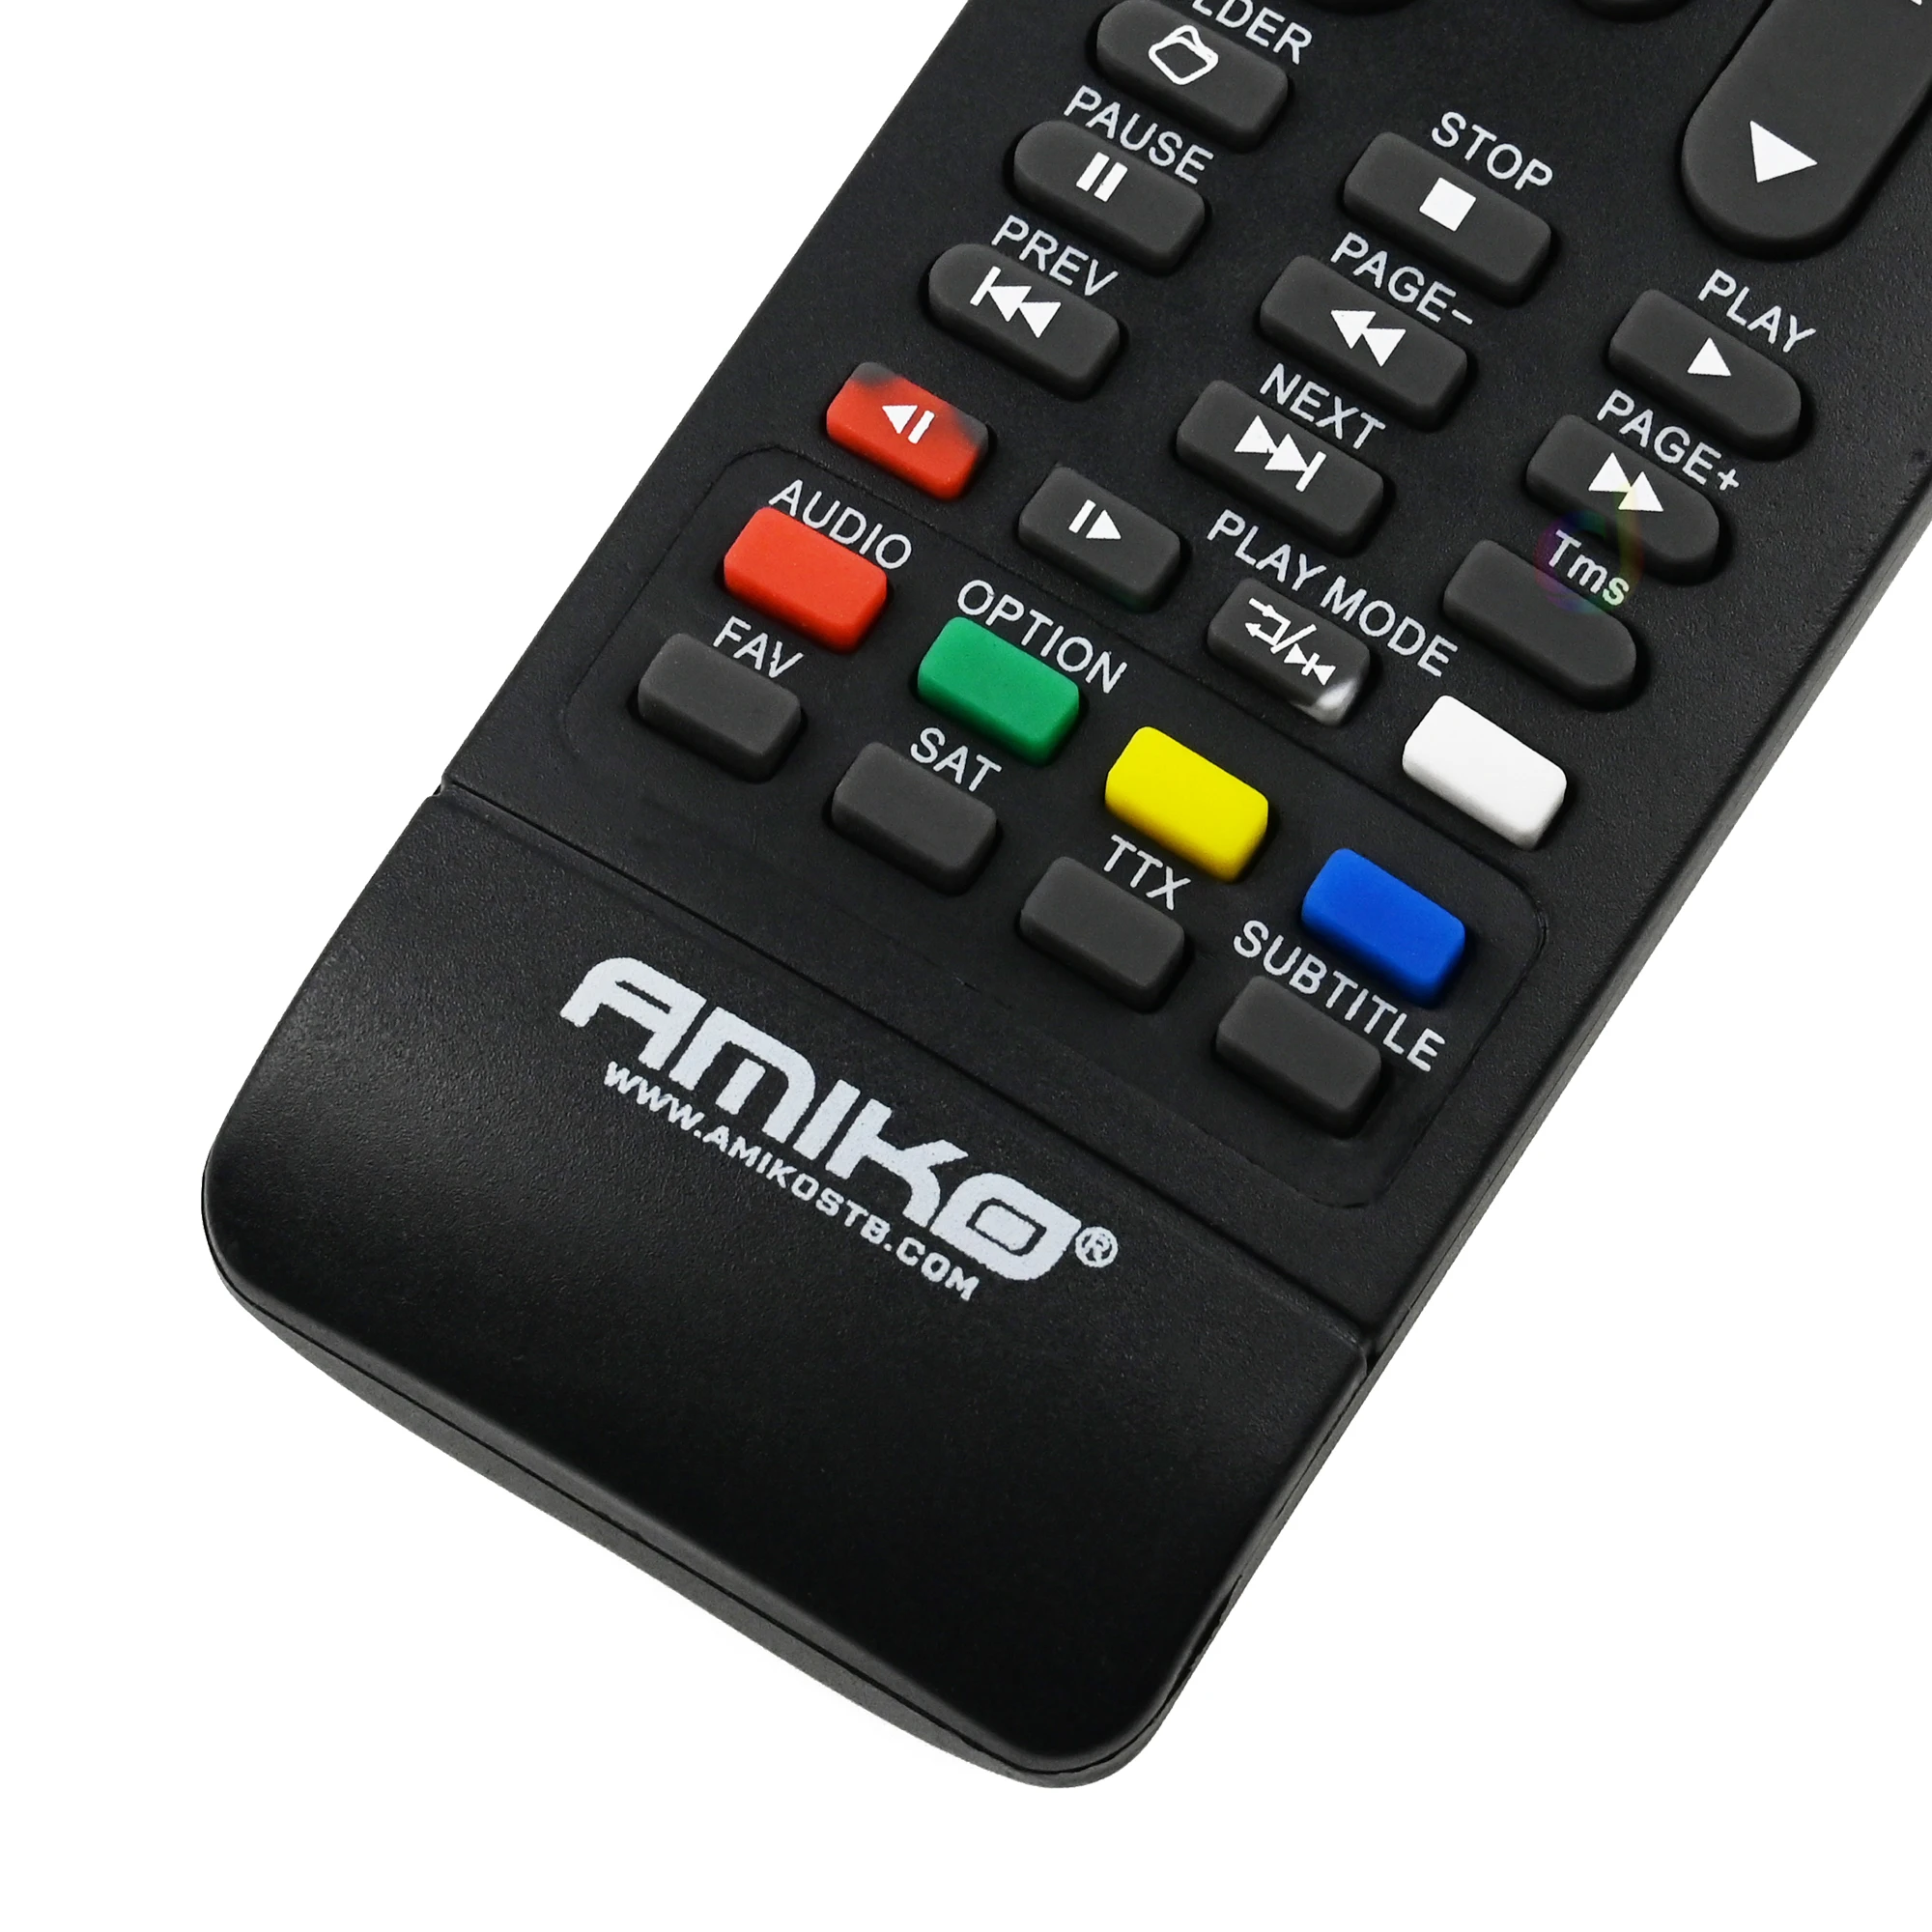 remote control for amiko mini hd 8150 8200 8300 8360 8840 shd 7900 8000 8110 8140 sthd 88208800 micro combo free global shipping